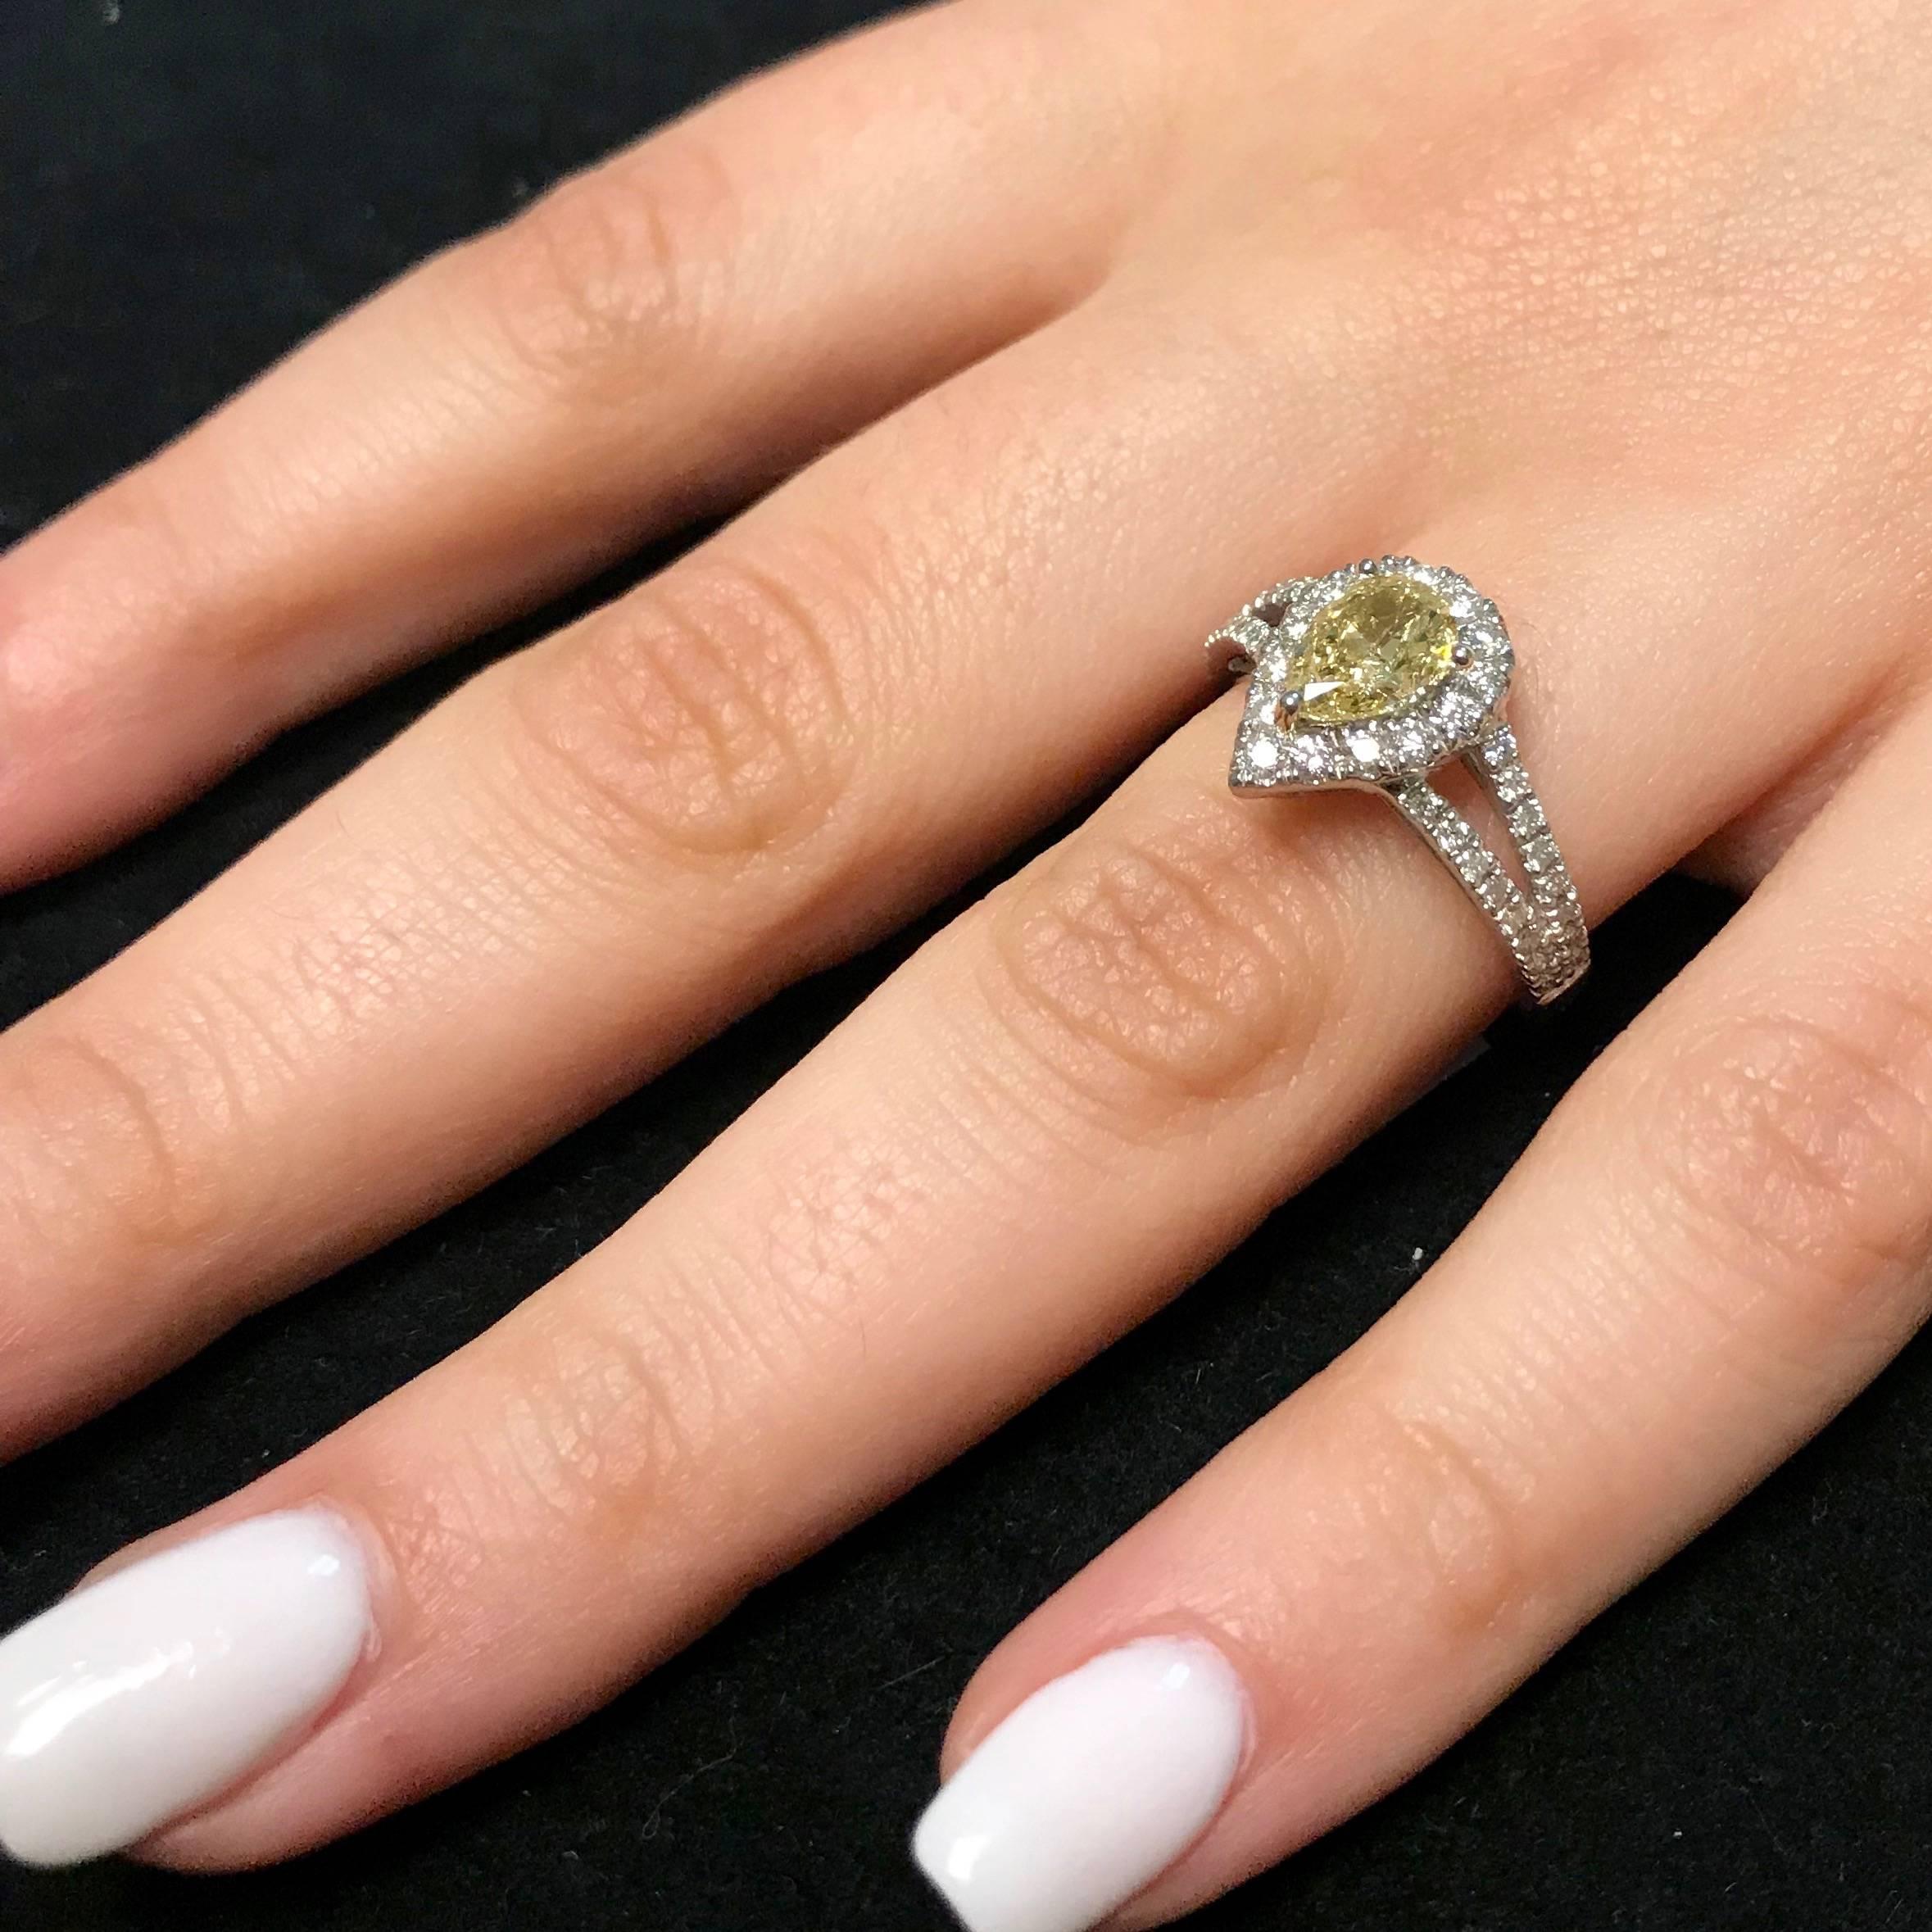 1 carat yellow diamond ring